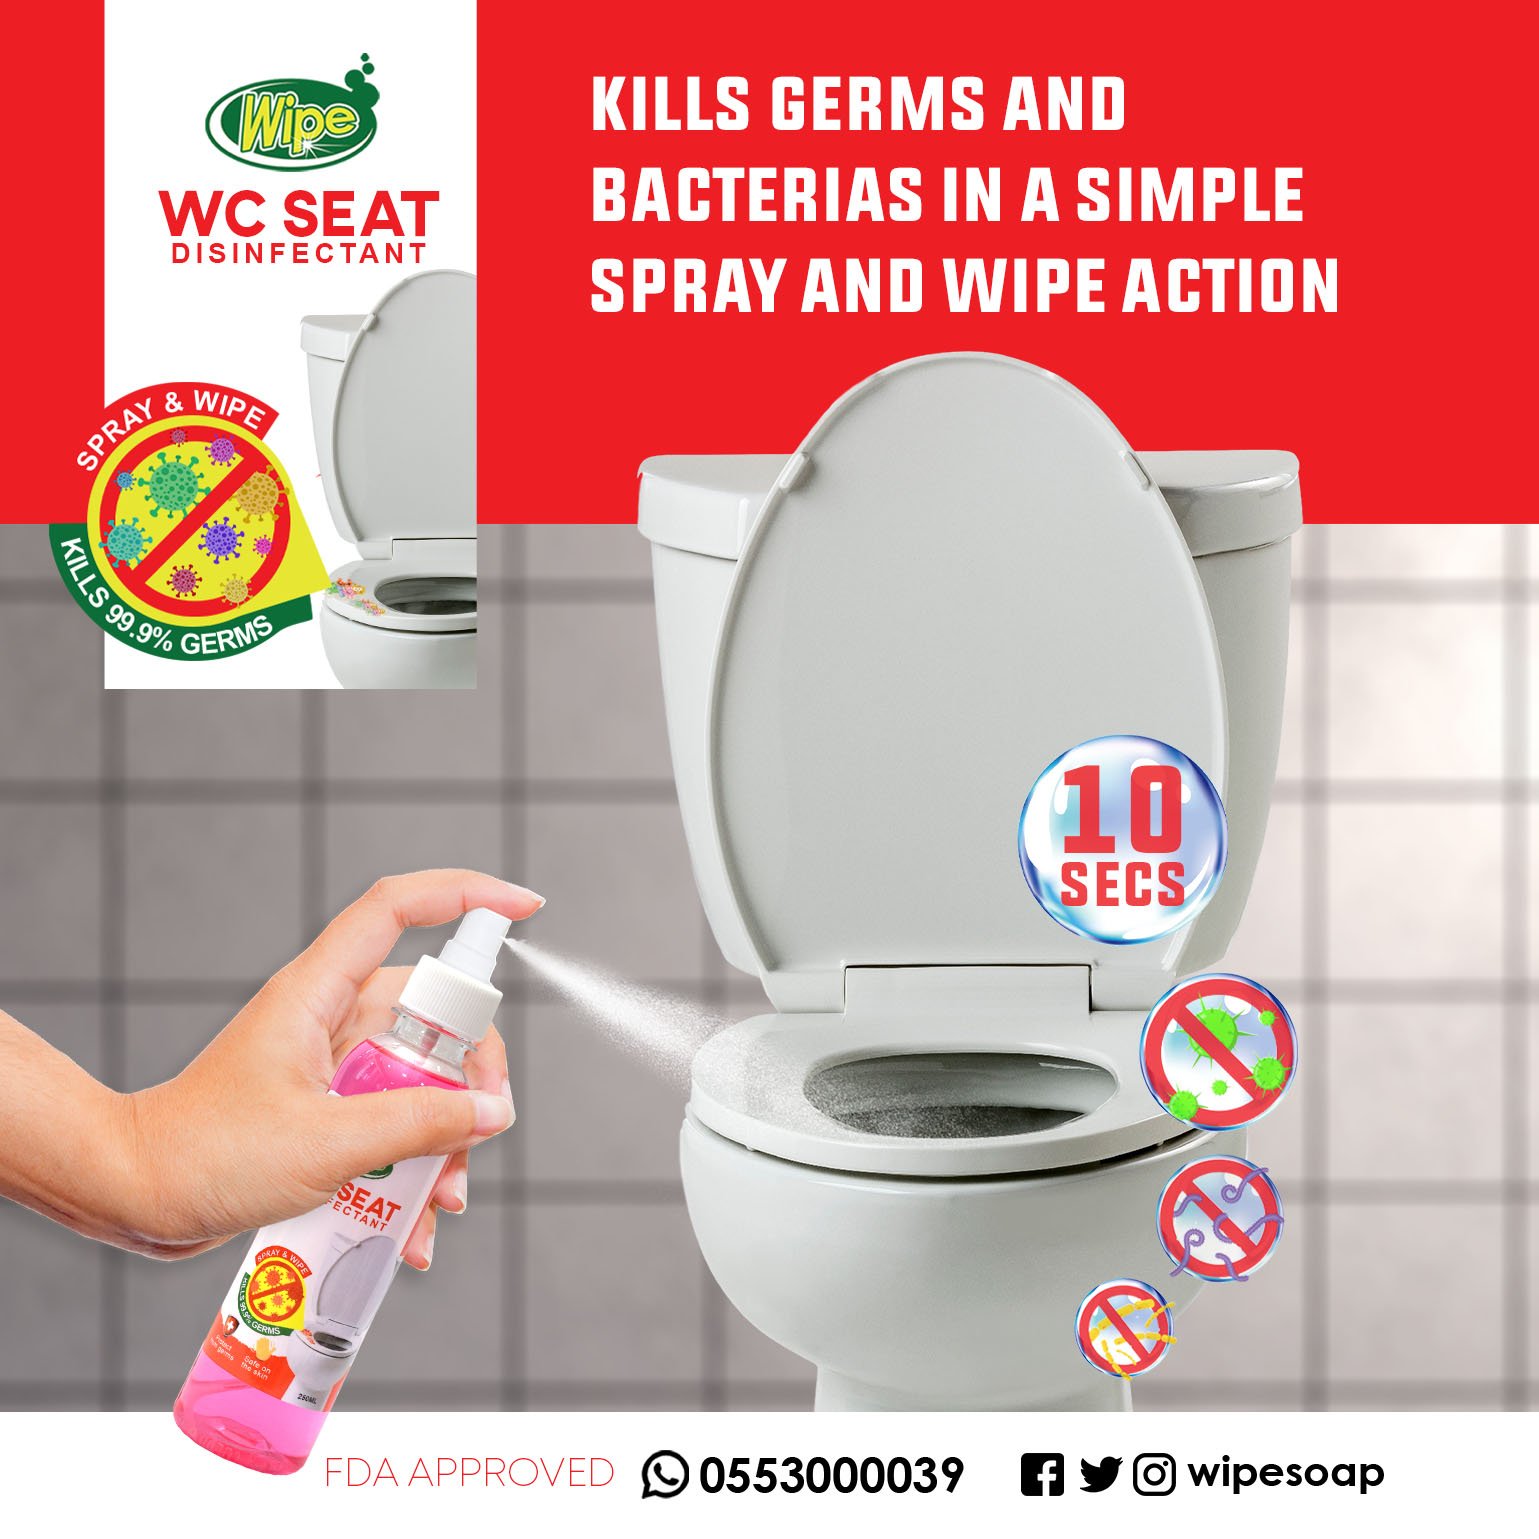 Wipe WC SEAT disinfectant (2)